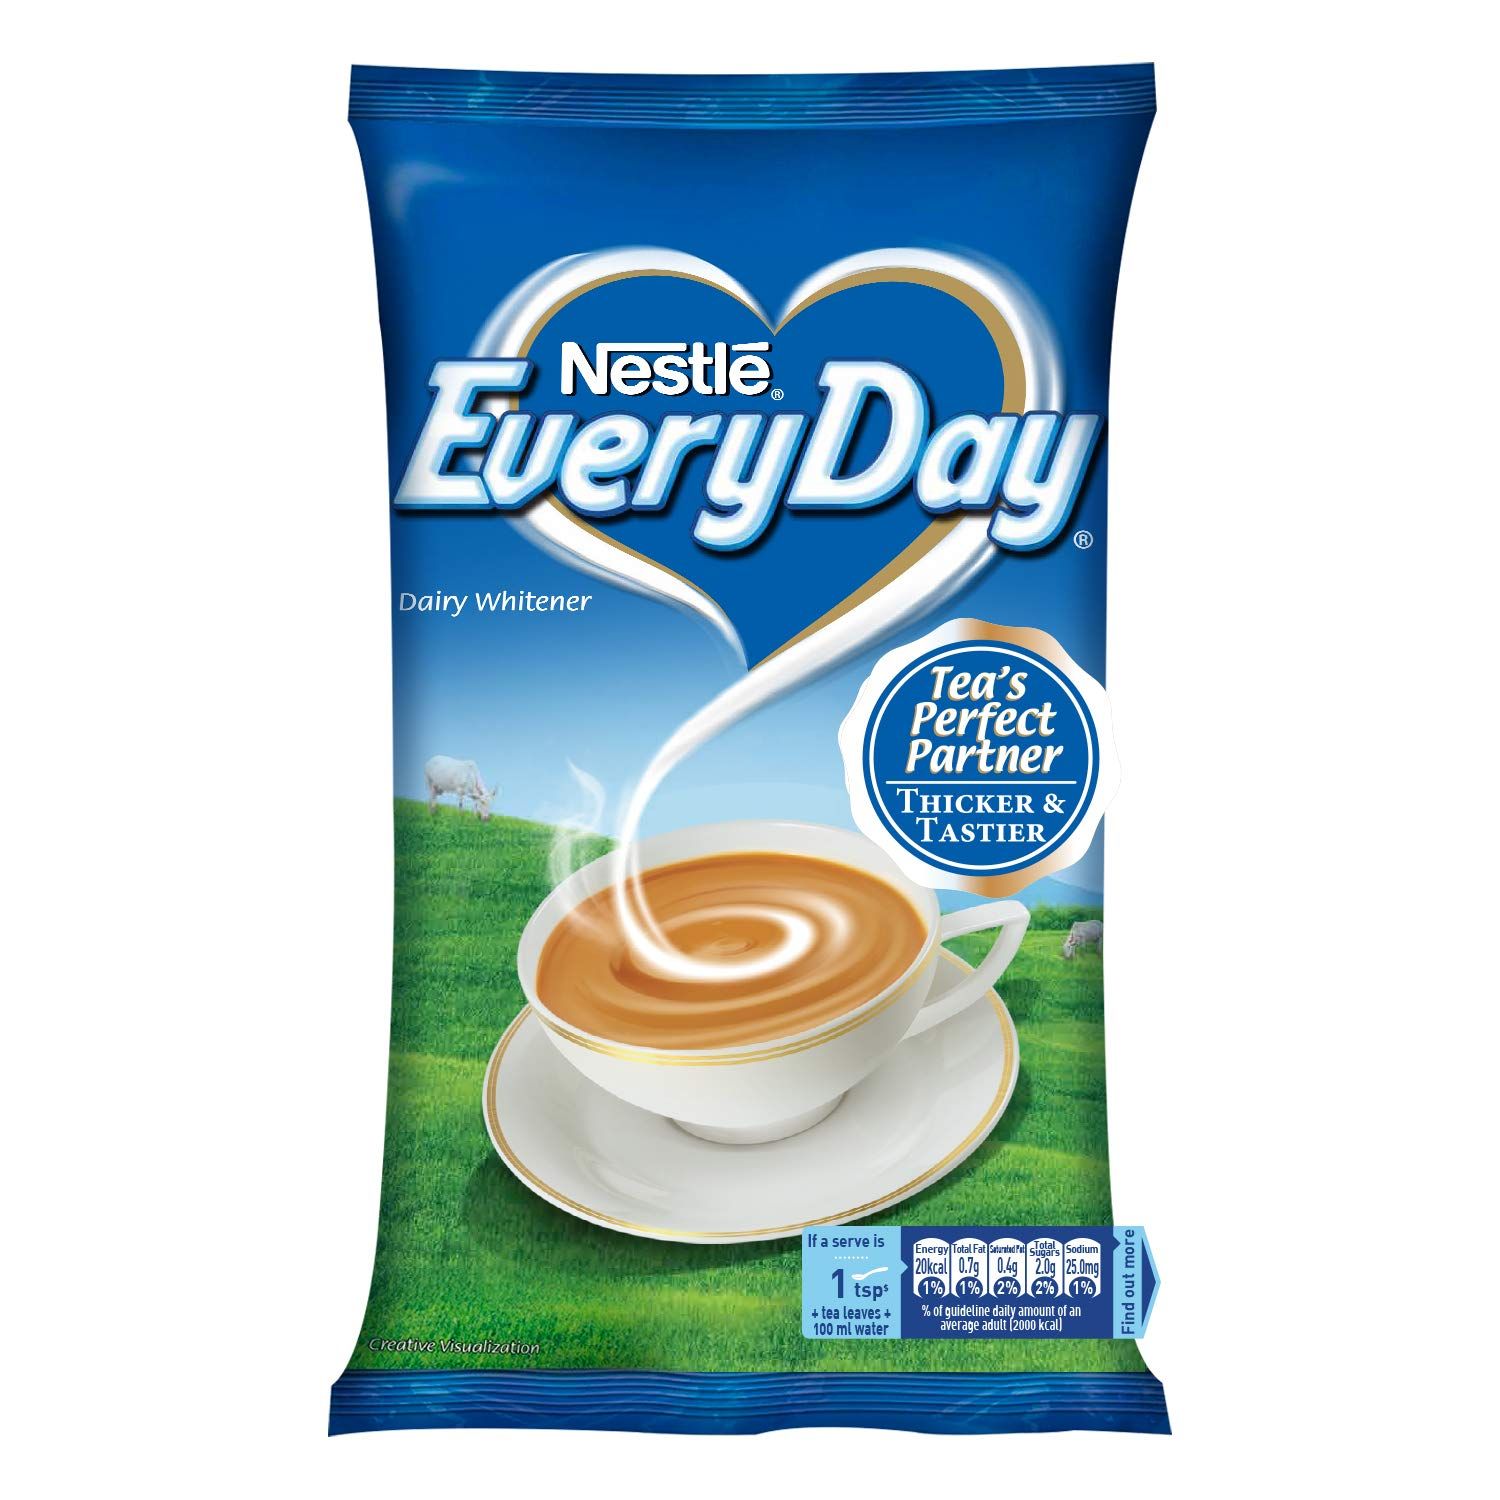 Nestle Everyday Dairy Whitener Milk Powder Image